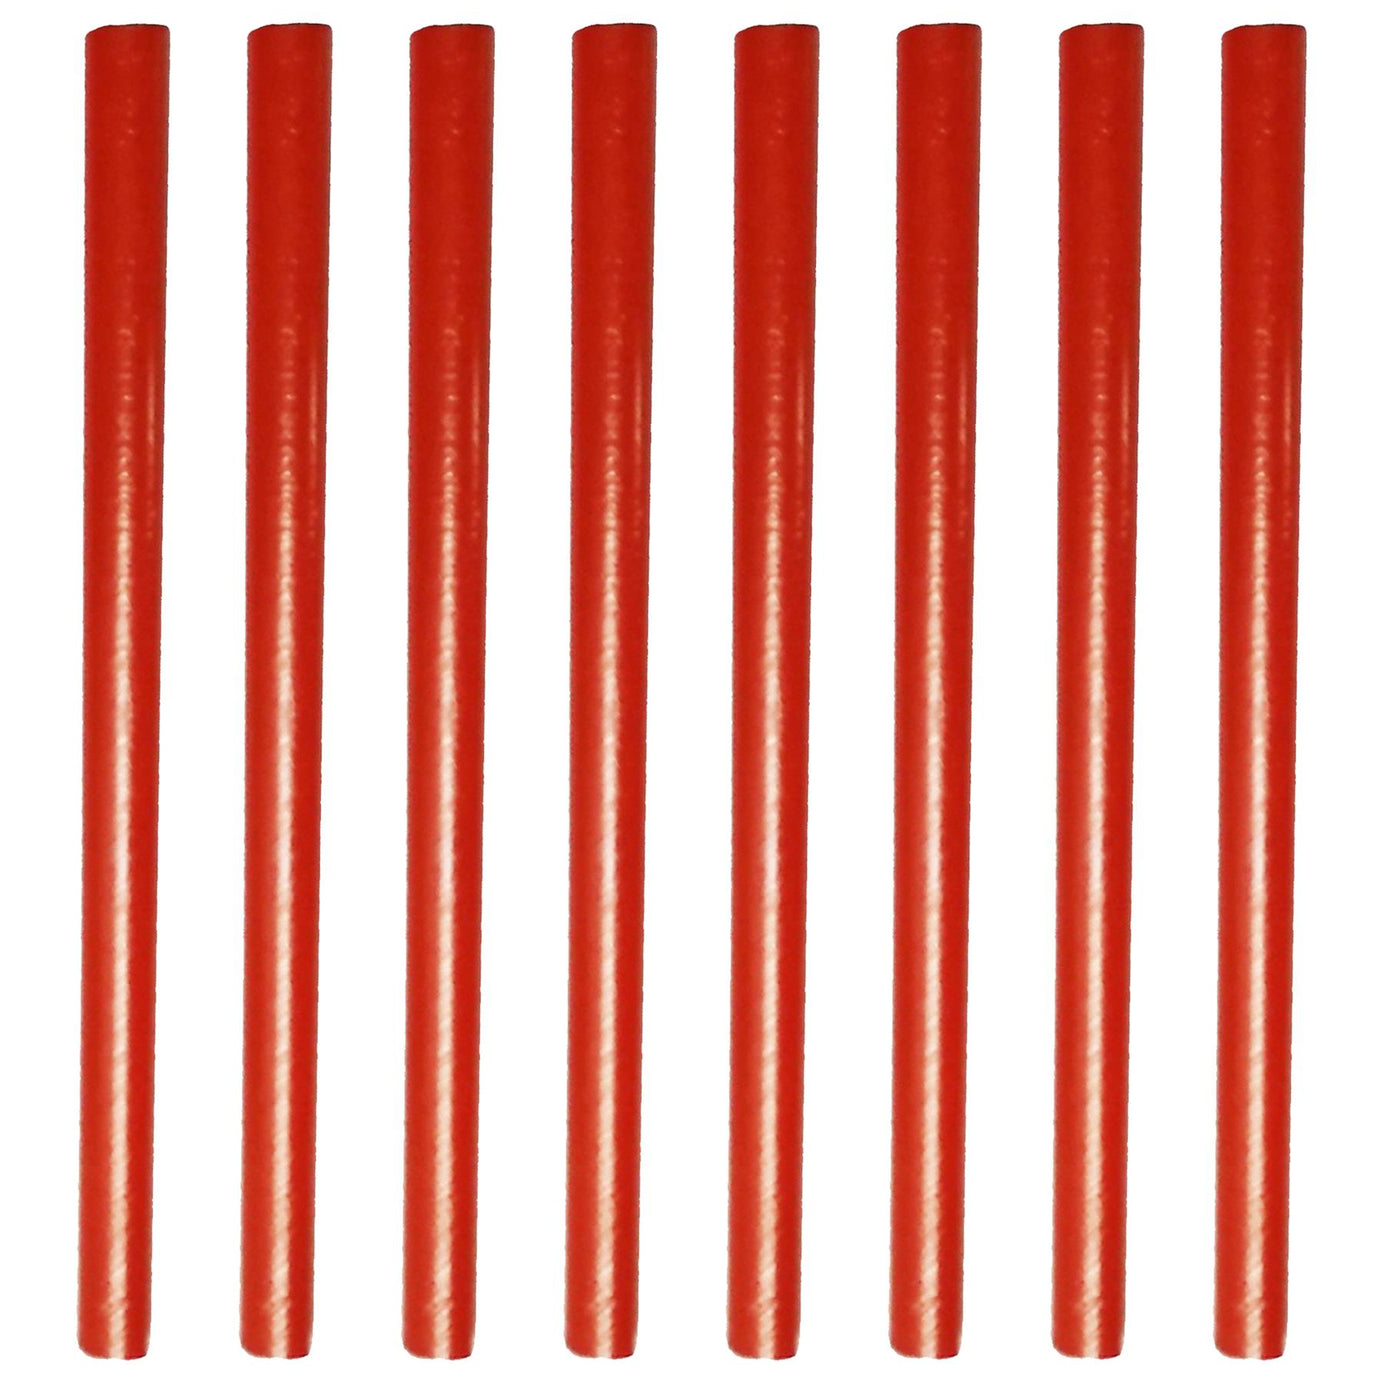 8 x Carpenters Pencils Joiner